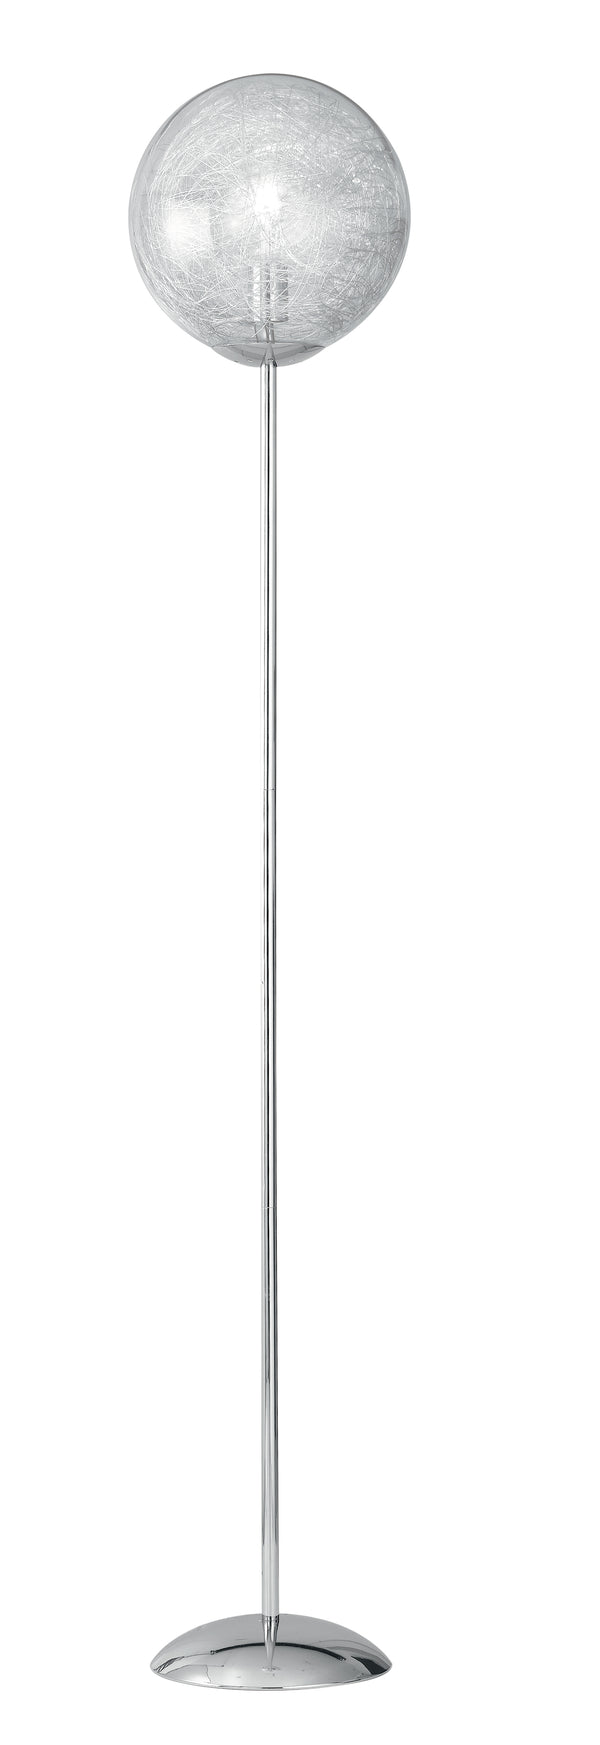 Stehlampenschirm Sphärisches Glasgeflecht Aluminiumdrähte Stehlampe Modern E27 Umwelt I-LAMPD/PIANT FILI prezzo